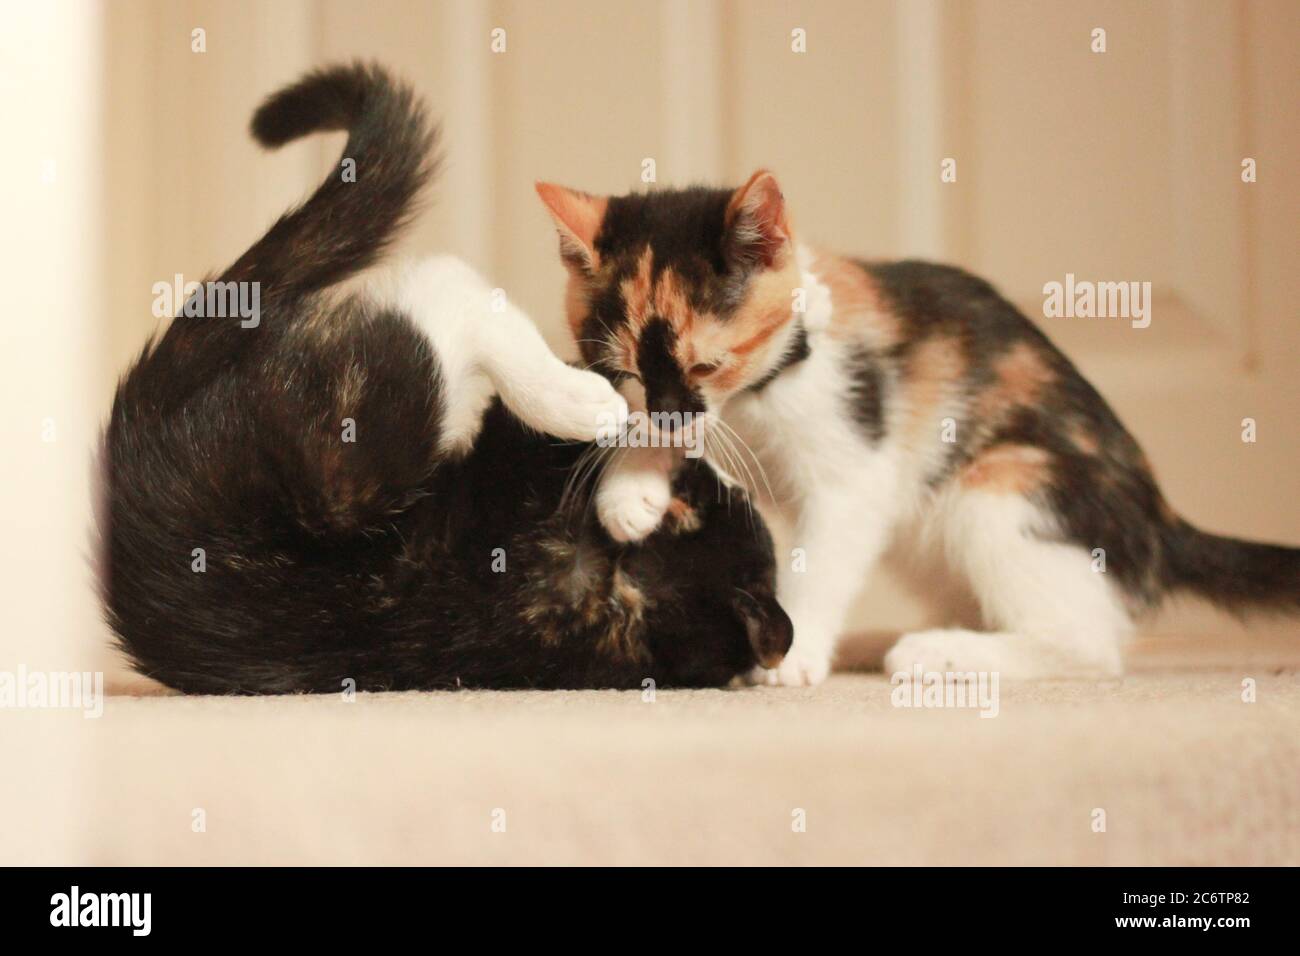 tortoiseshell kitten playing tug of war with another kitten